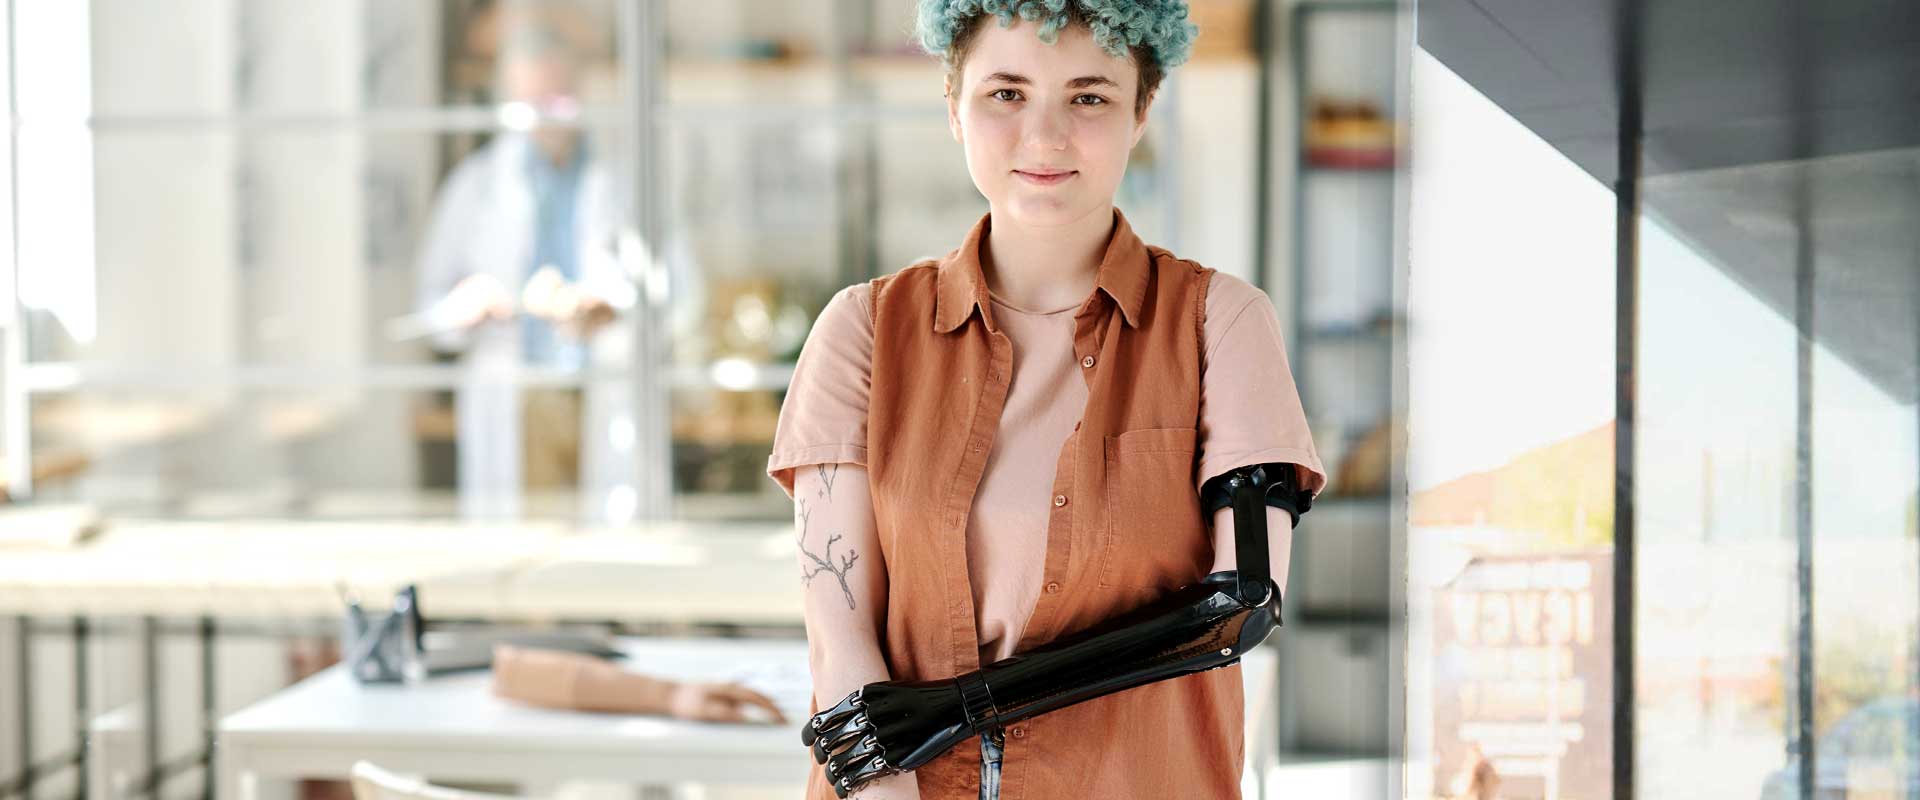 Junge Frau mit Armprotese - EUTB Verden Osterholz - Teilhabeberatung